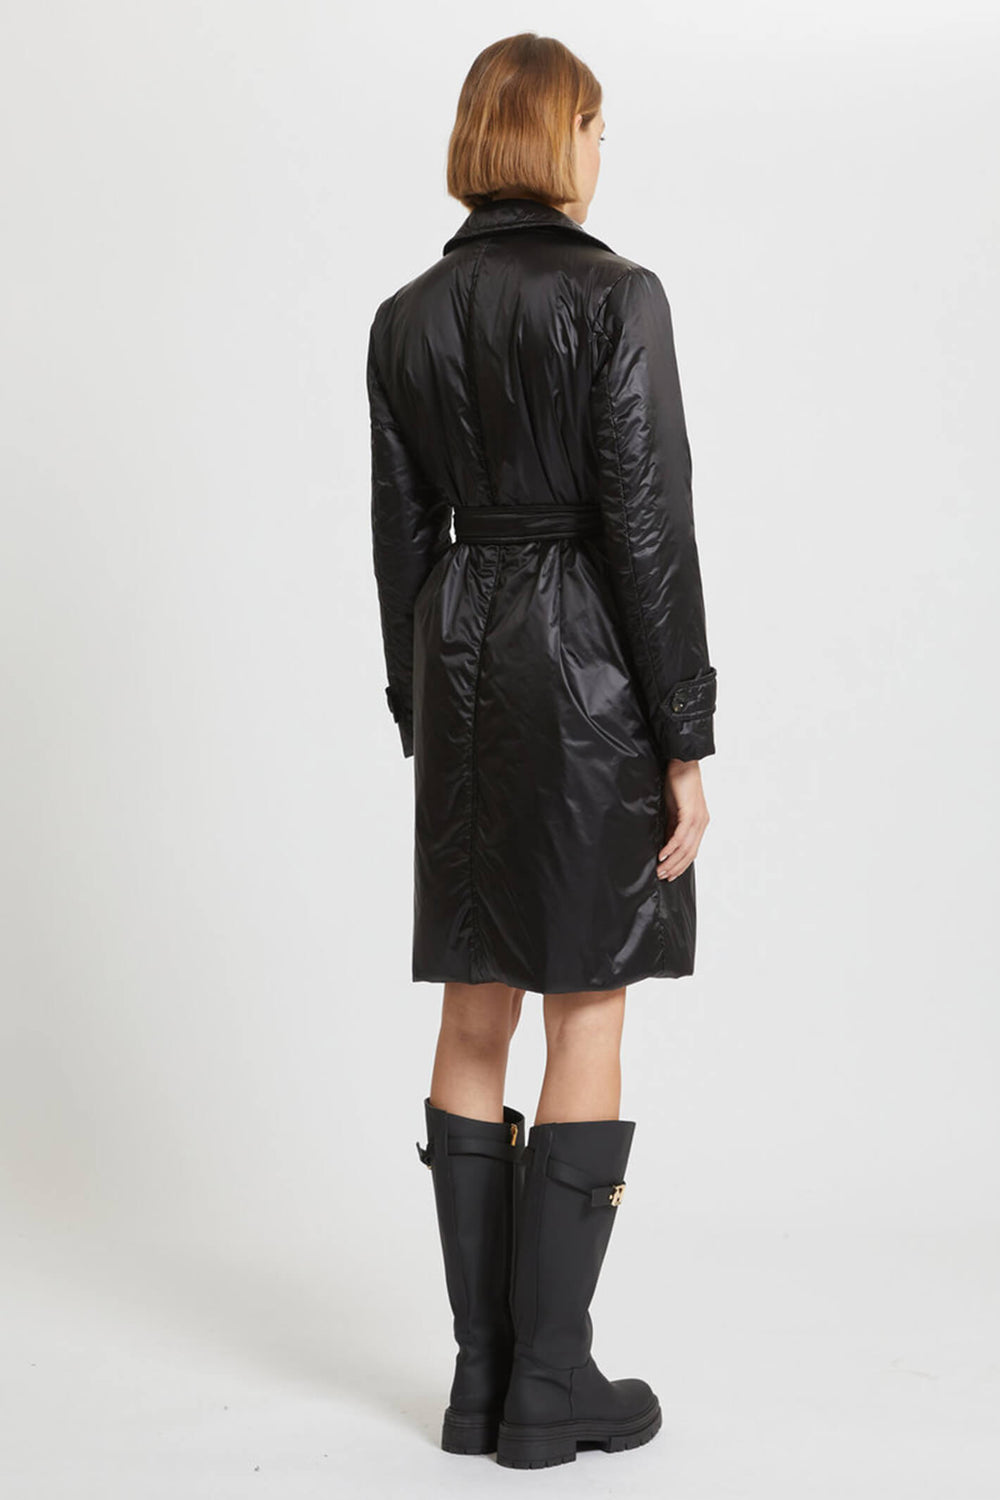 Marella Rosalia 2334960437200 Black Quilted Coat - Olivia Grace Fashion